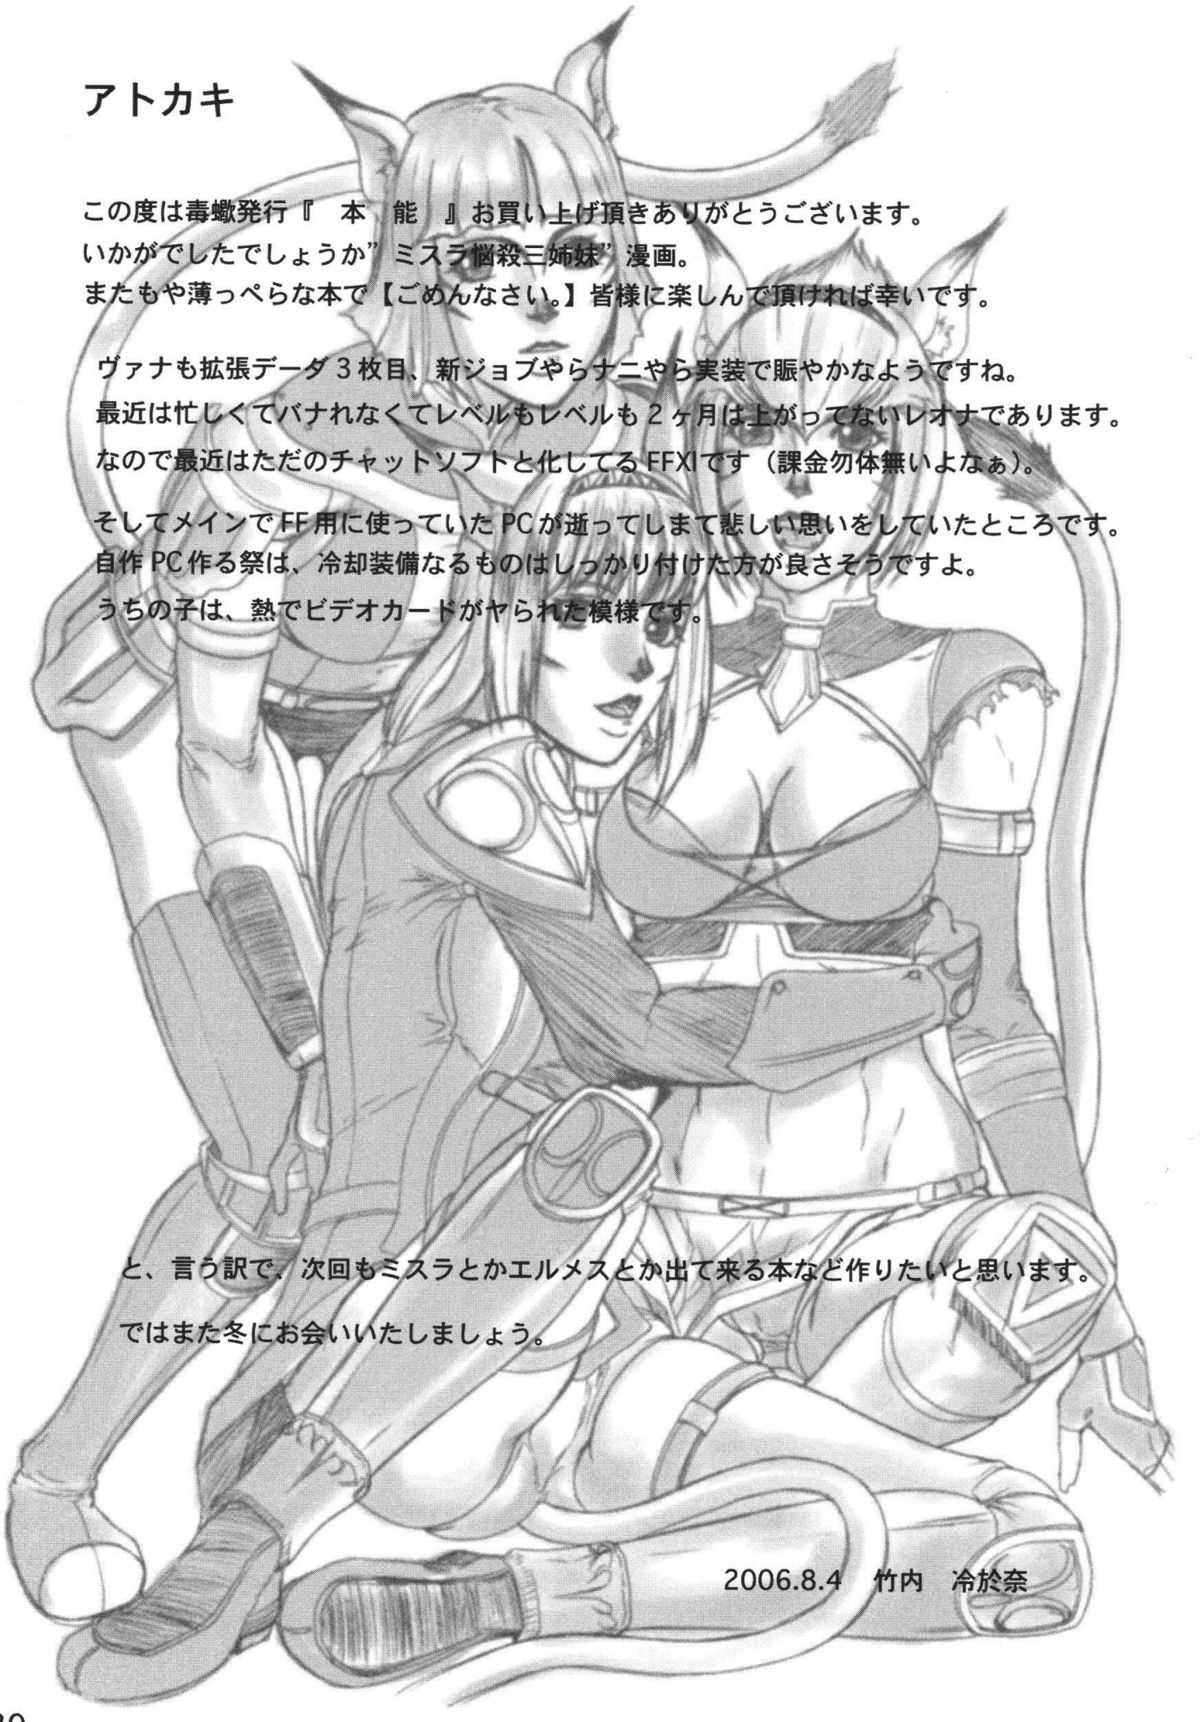 [Leona Takeuchi] Instinct (Final Fantasy XI) Instinct (Honnou) (本能)